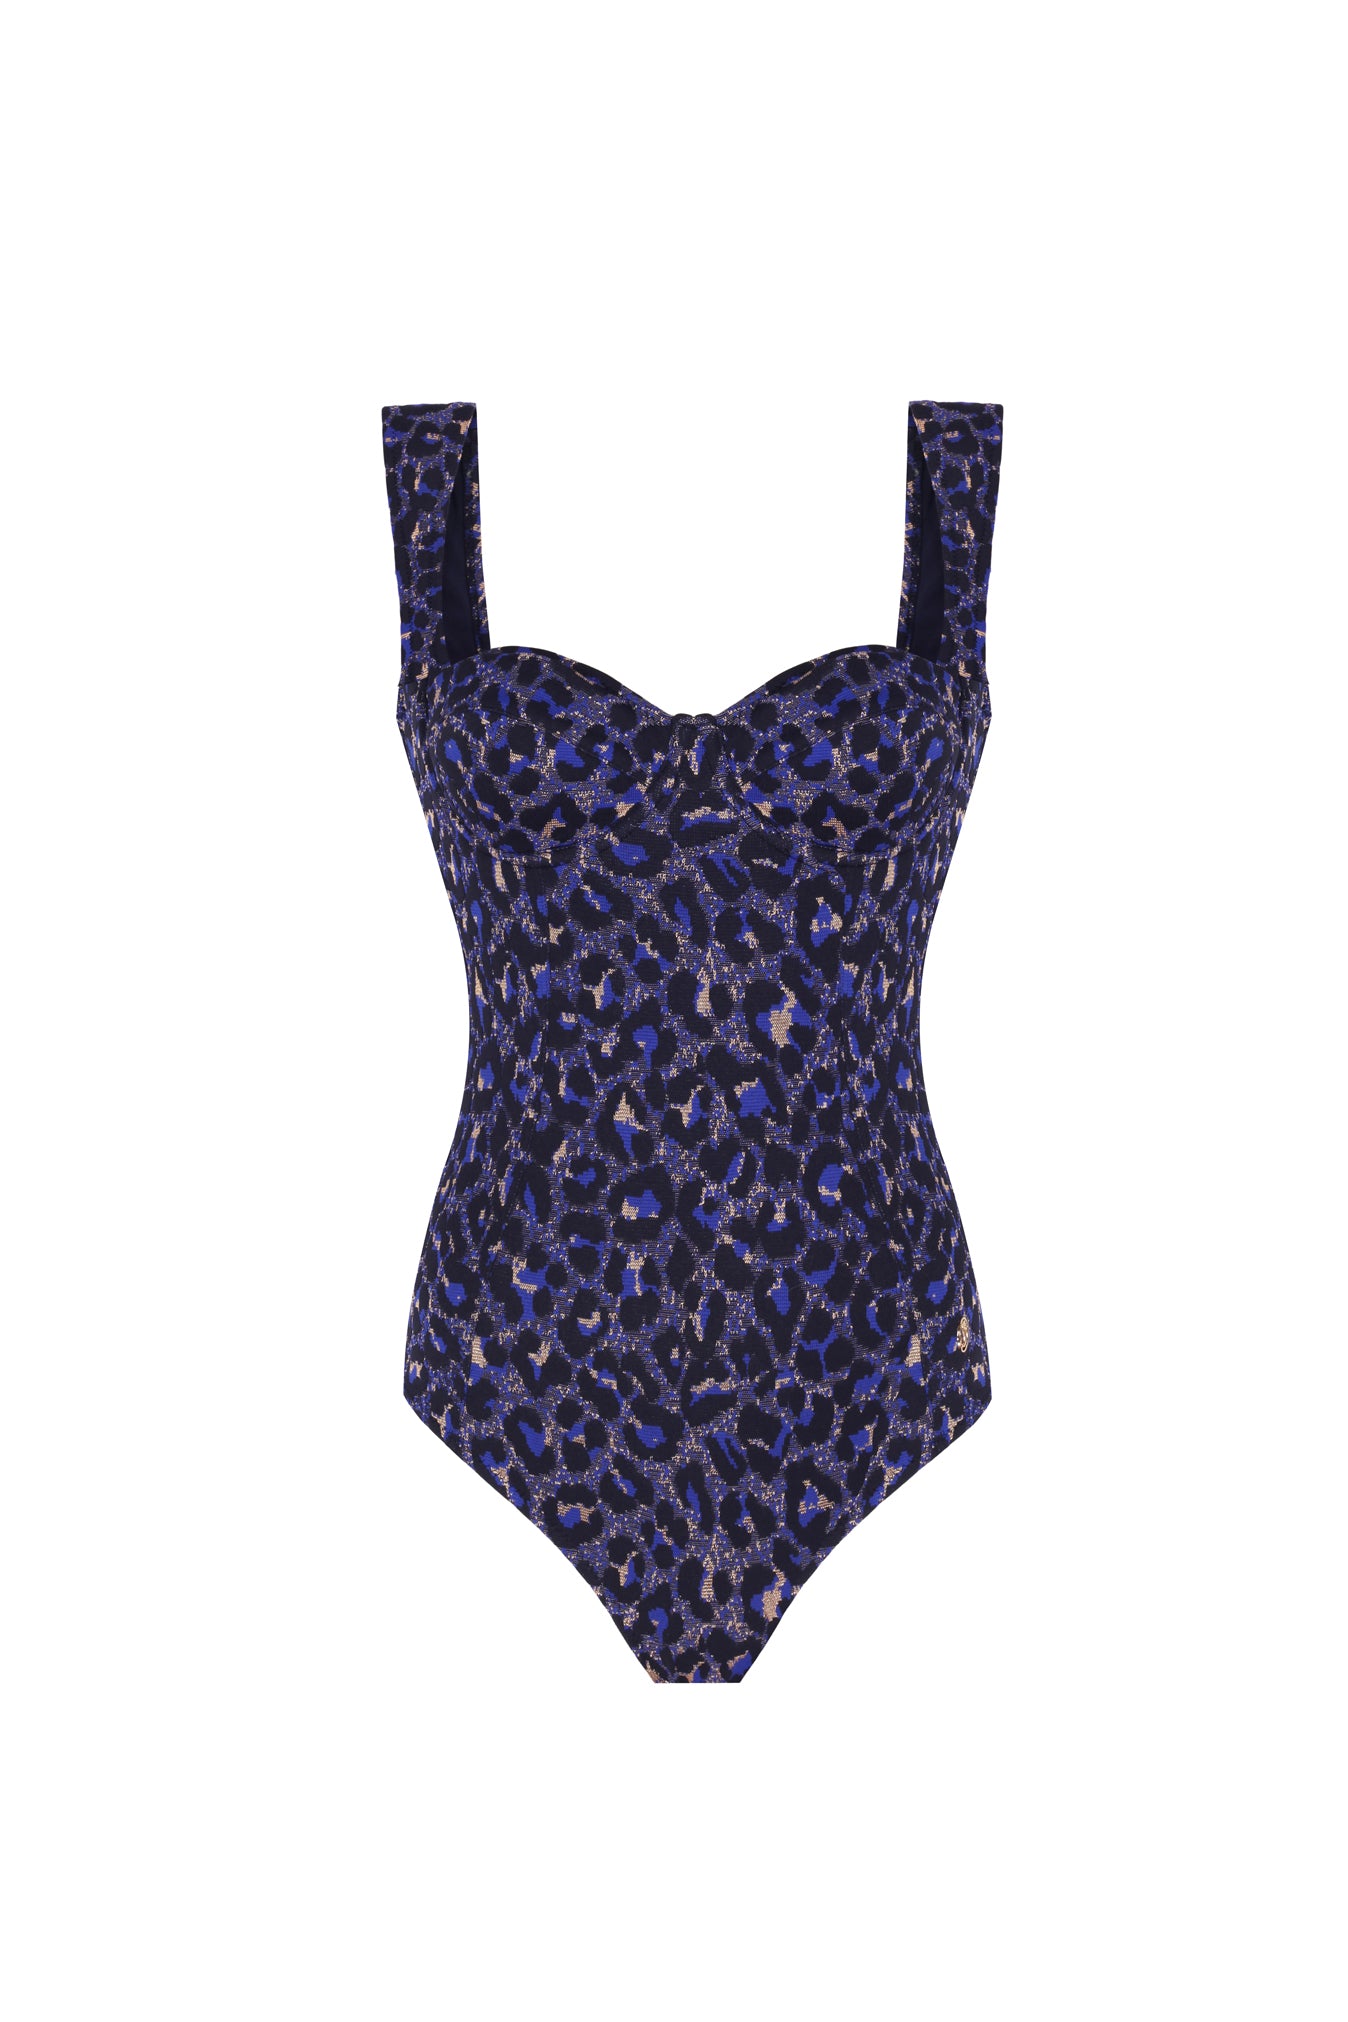 Ophelia Blue Leopard Textured Swimsuit